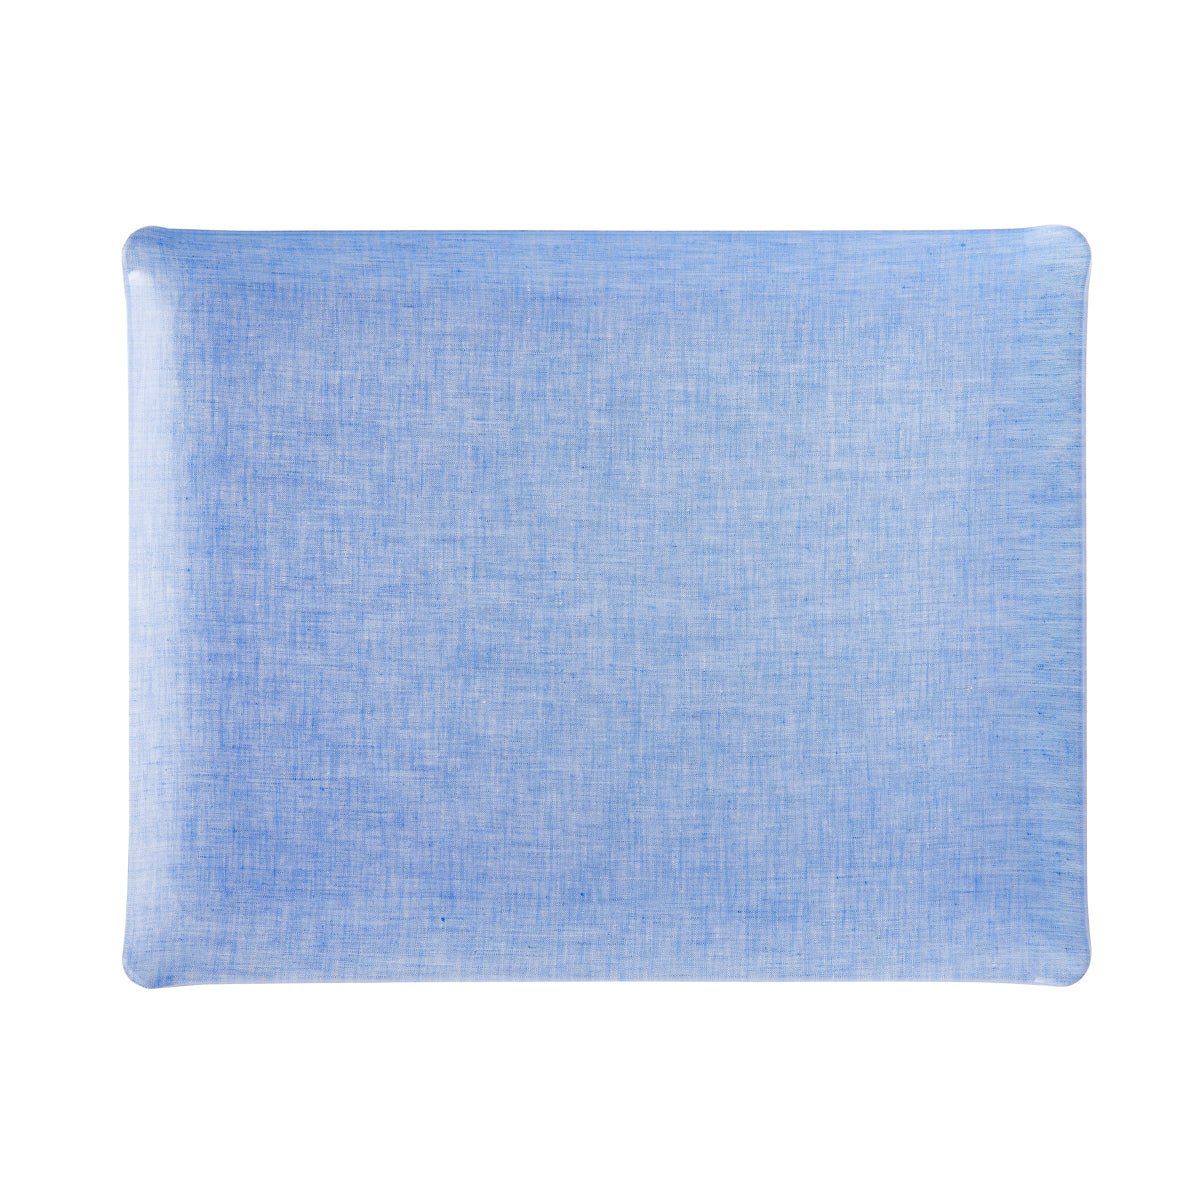 Nina Campbell Fabric Tray Large -  Blue